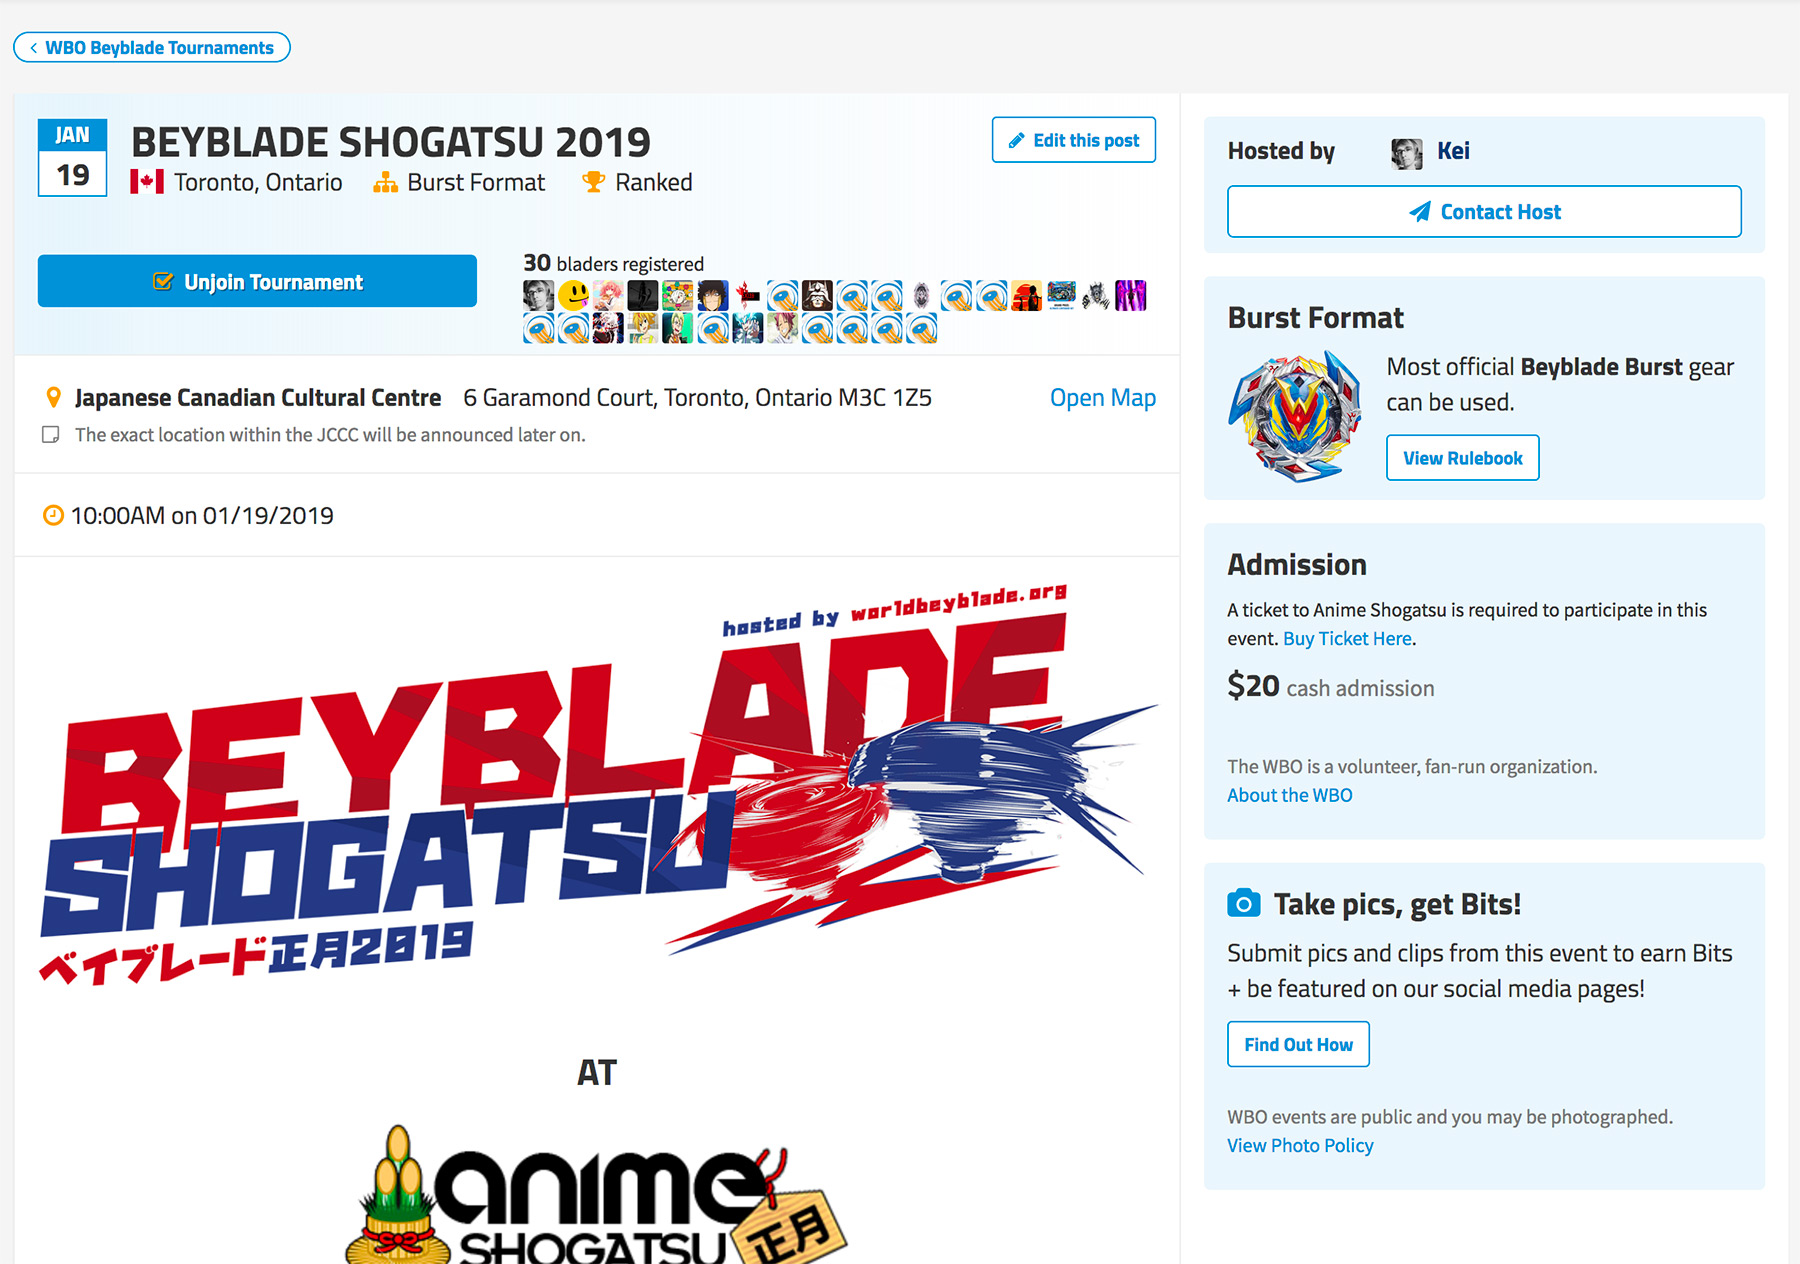 [Image: world-beyblade-organization-tournament-page.jpg]